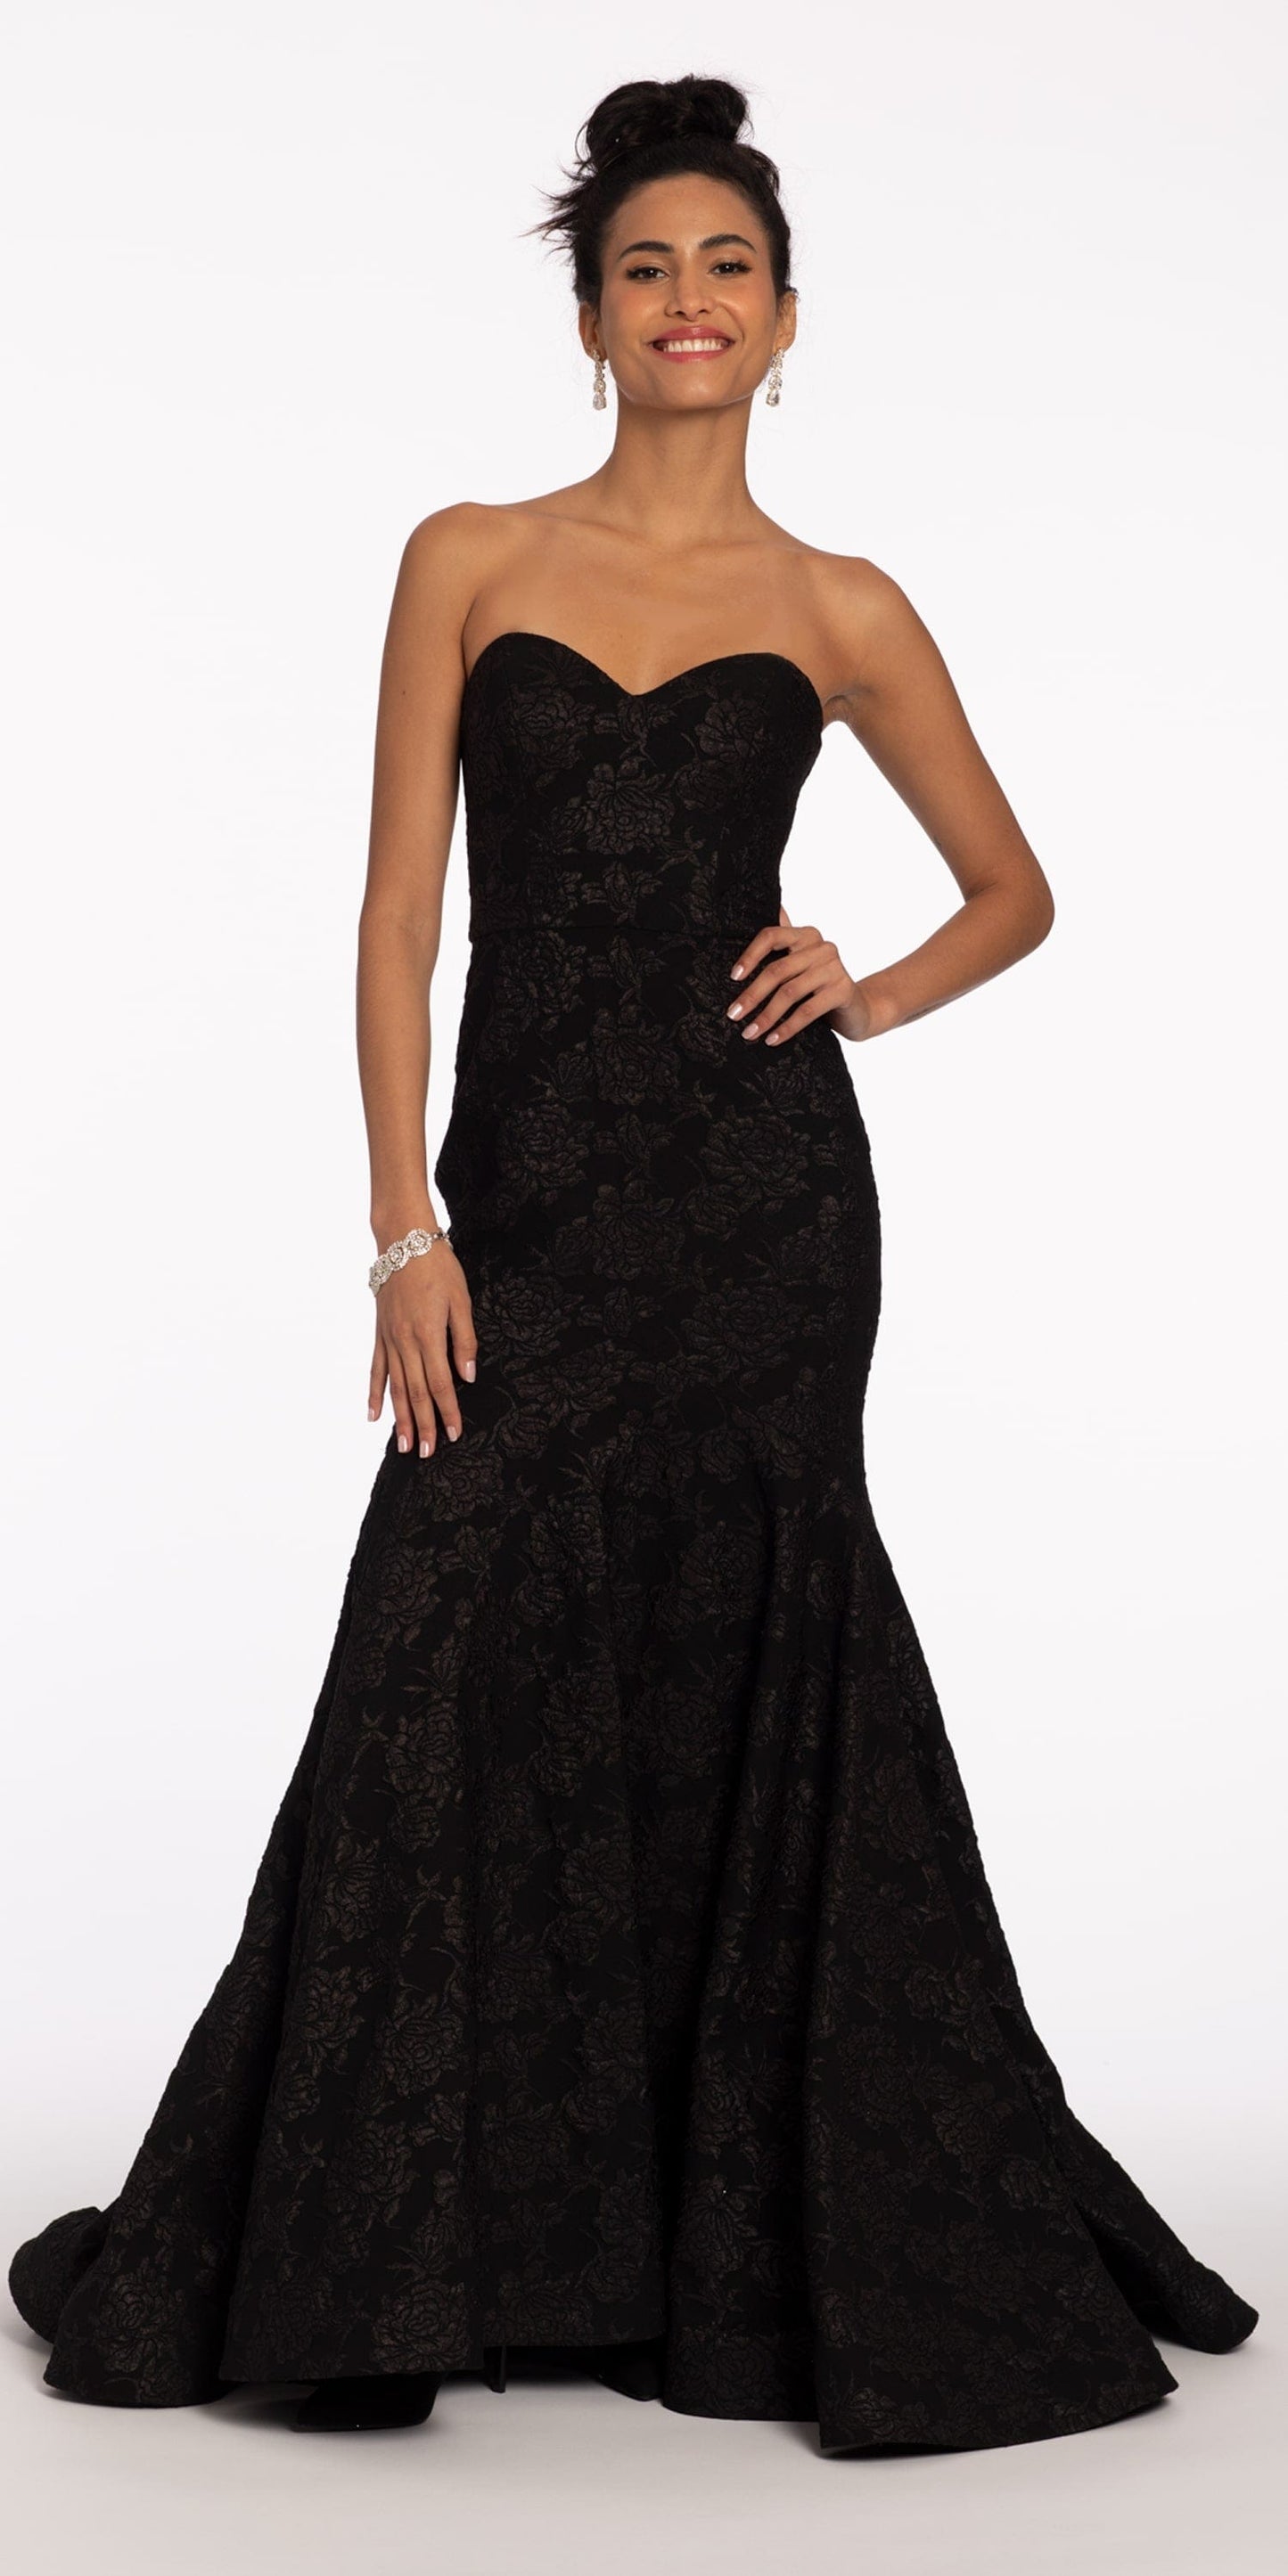 Camille La Vie Sweetheart Embellished Mermaid Dress missy / 2 / black